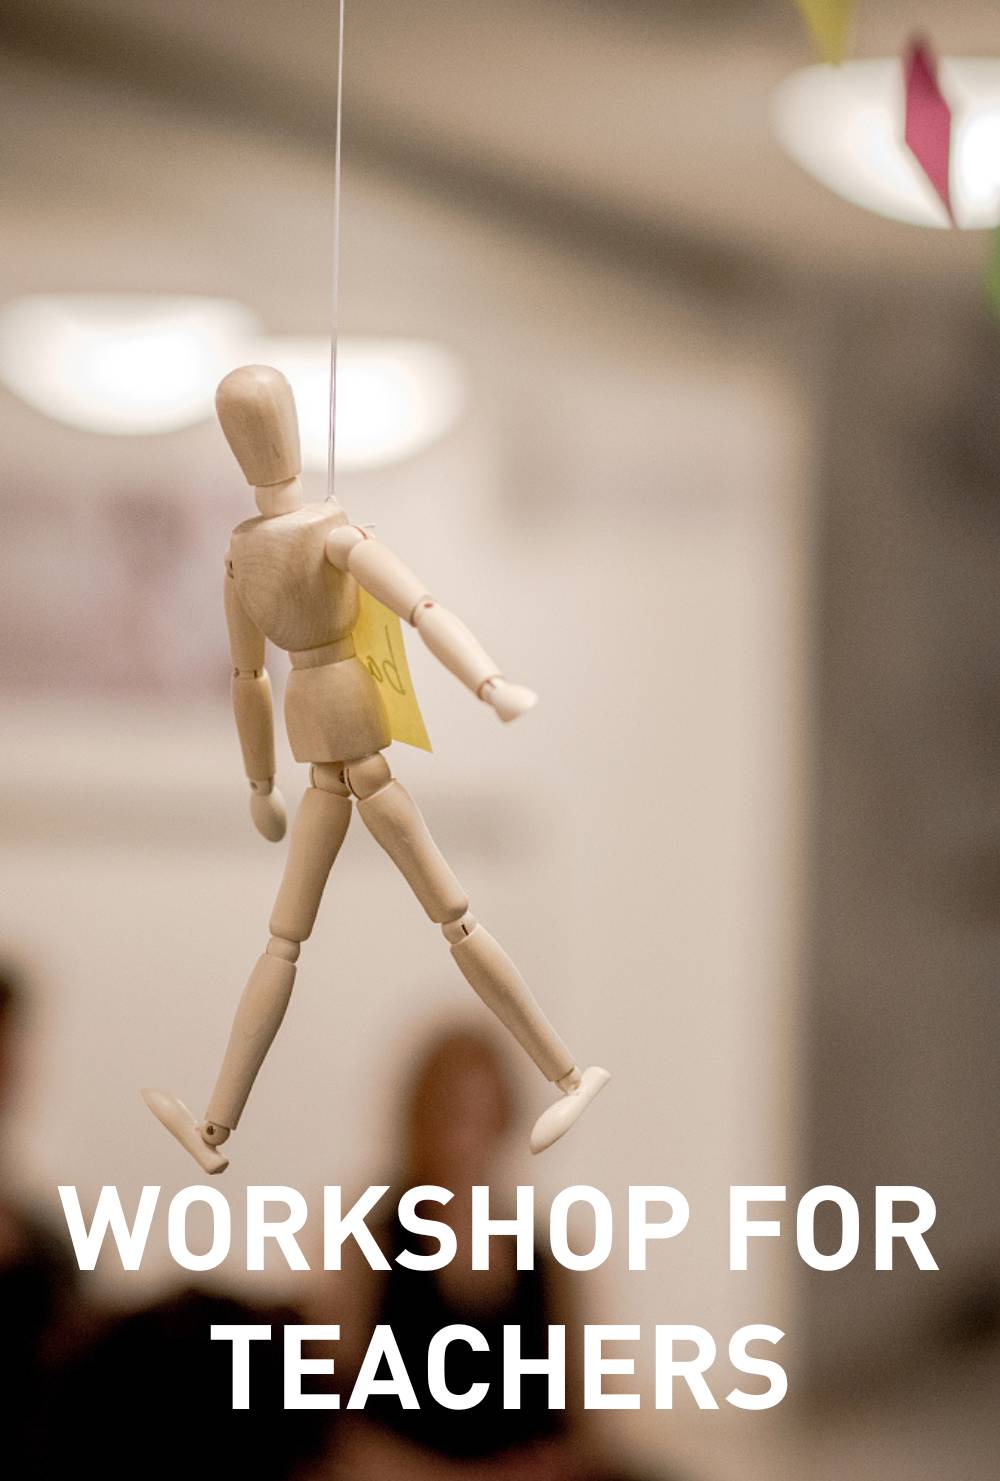 Workshop for teachers